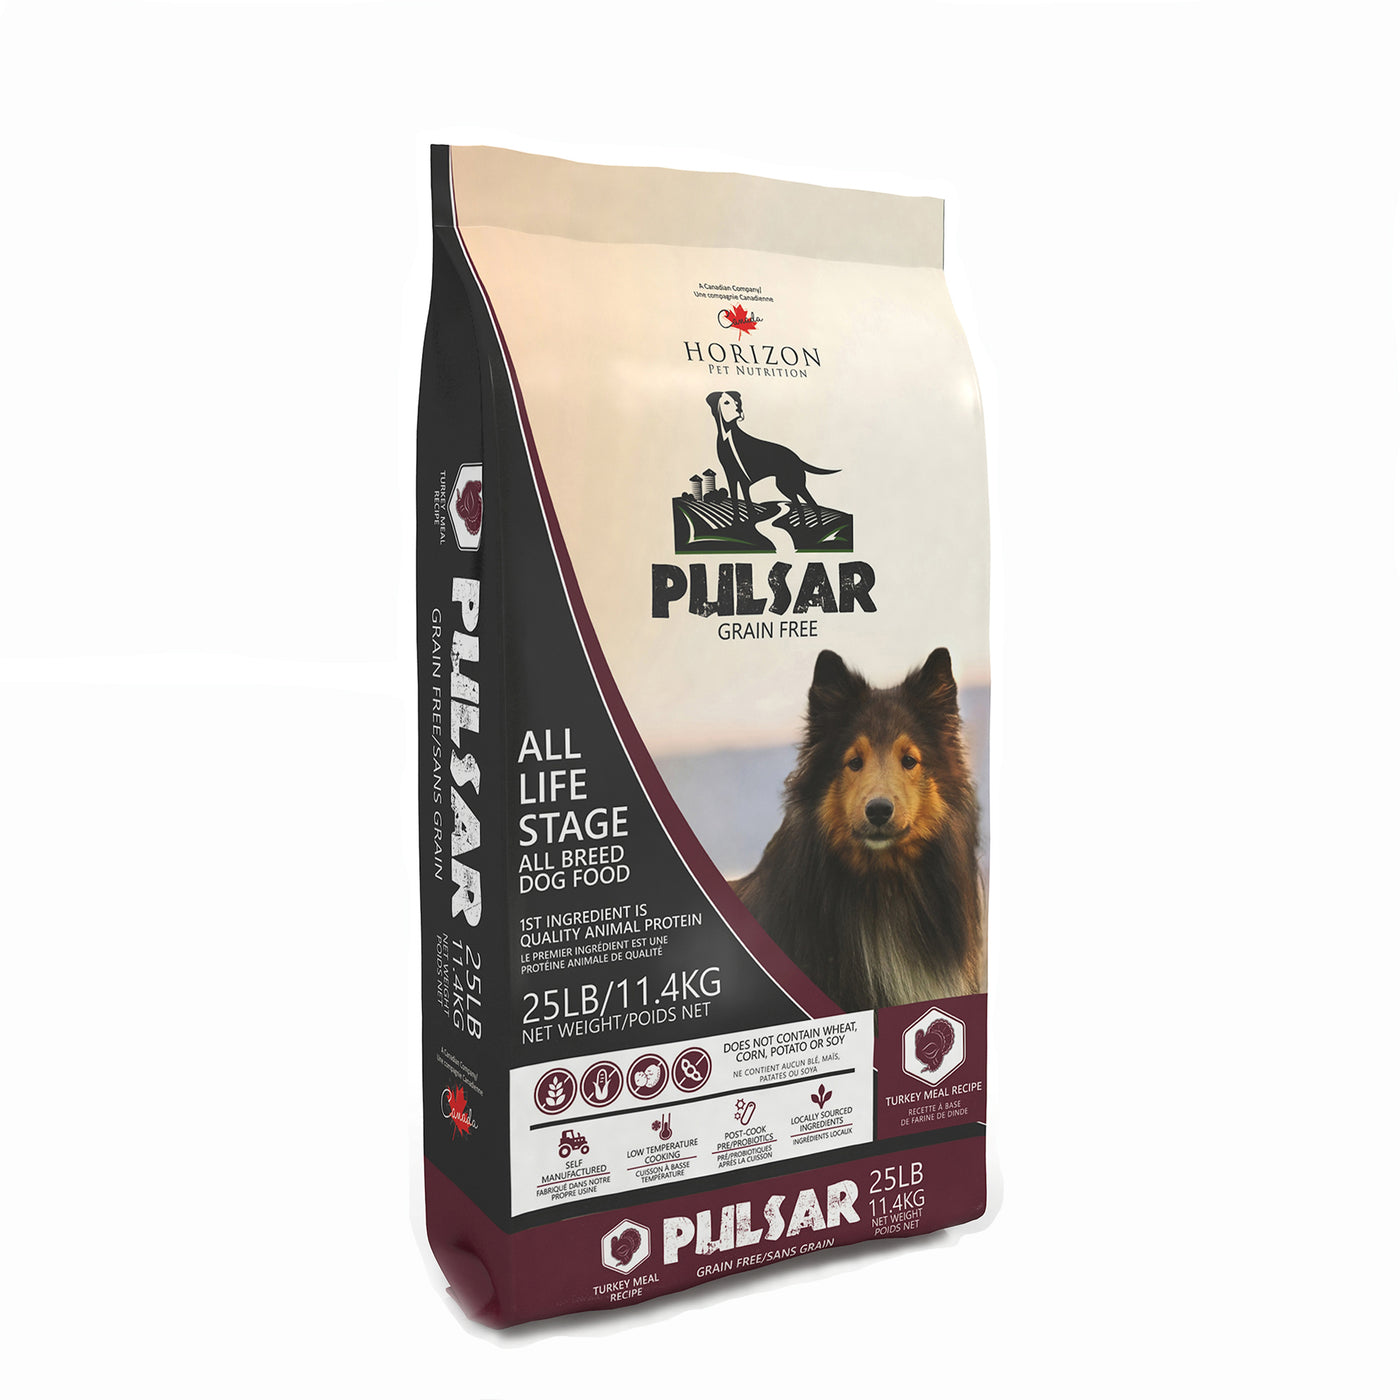 Horizon Pet Nutrition - Pulsar Turkey Dry Dog Food